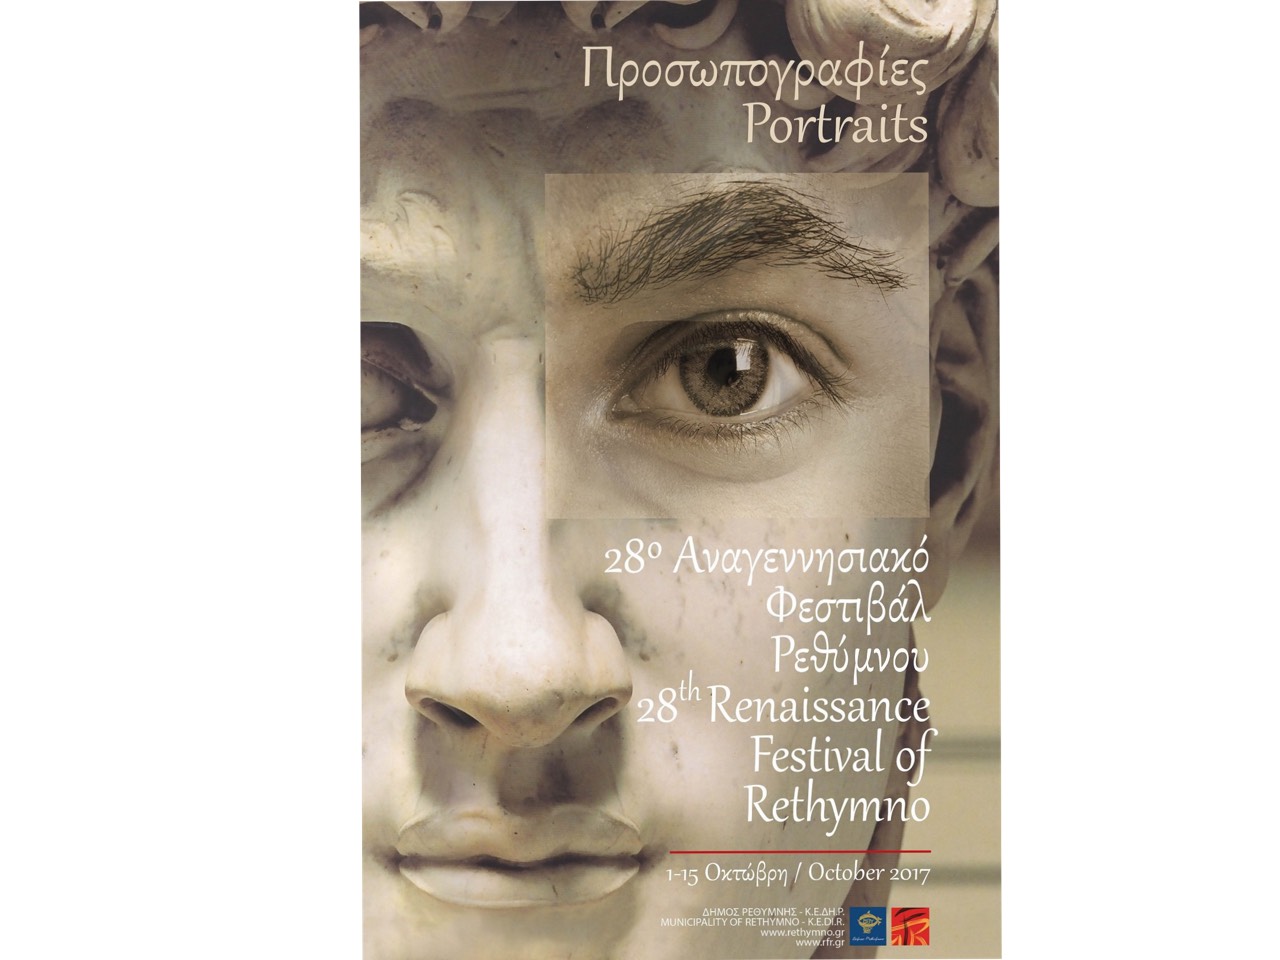 The Renaissance Festival in Rethimno, culture art music concerts rethymno, activities rethymno, events rethymno crete